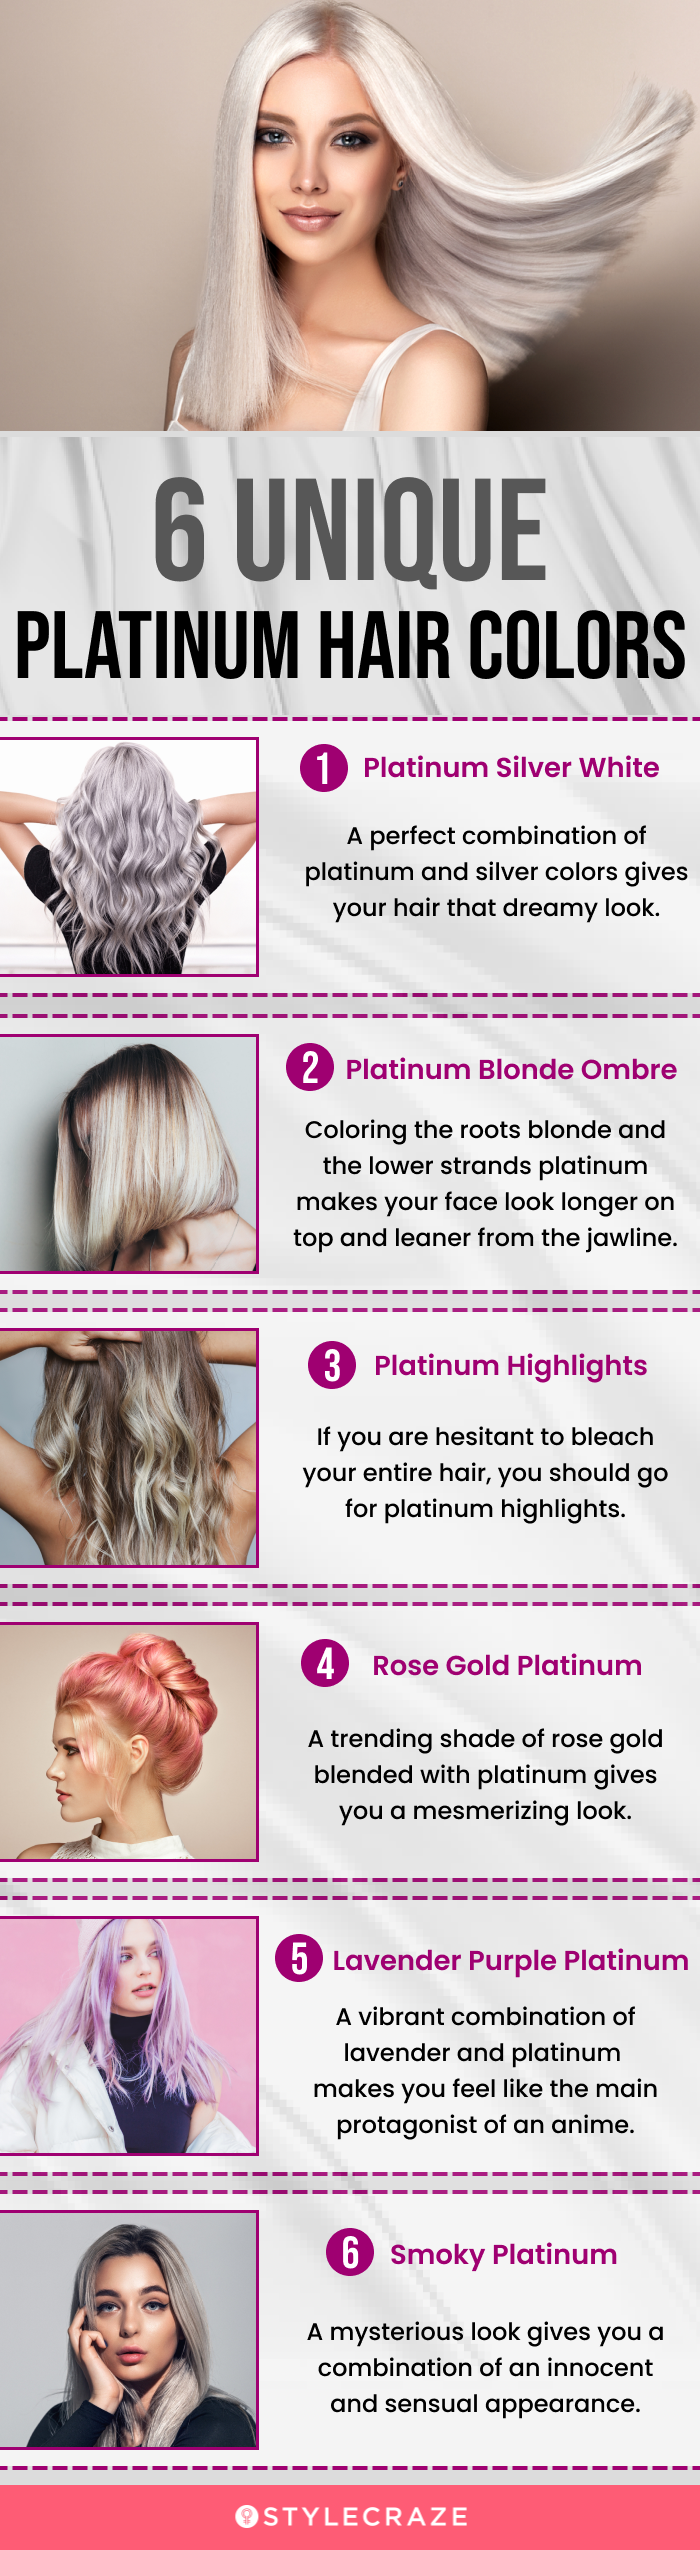 6 unique platinum hair colors (infographic)